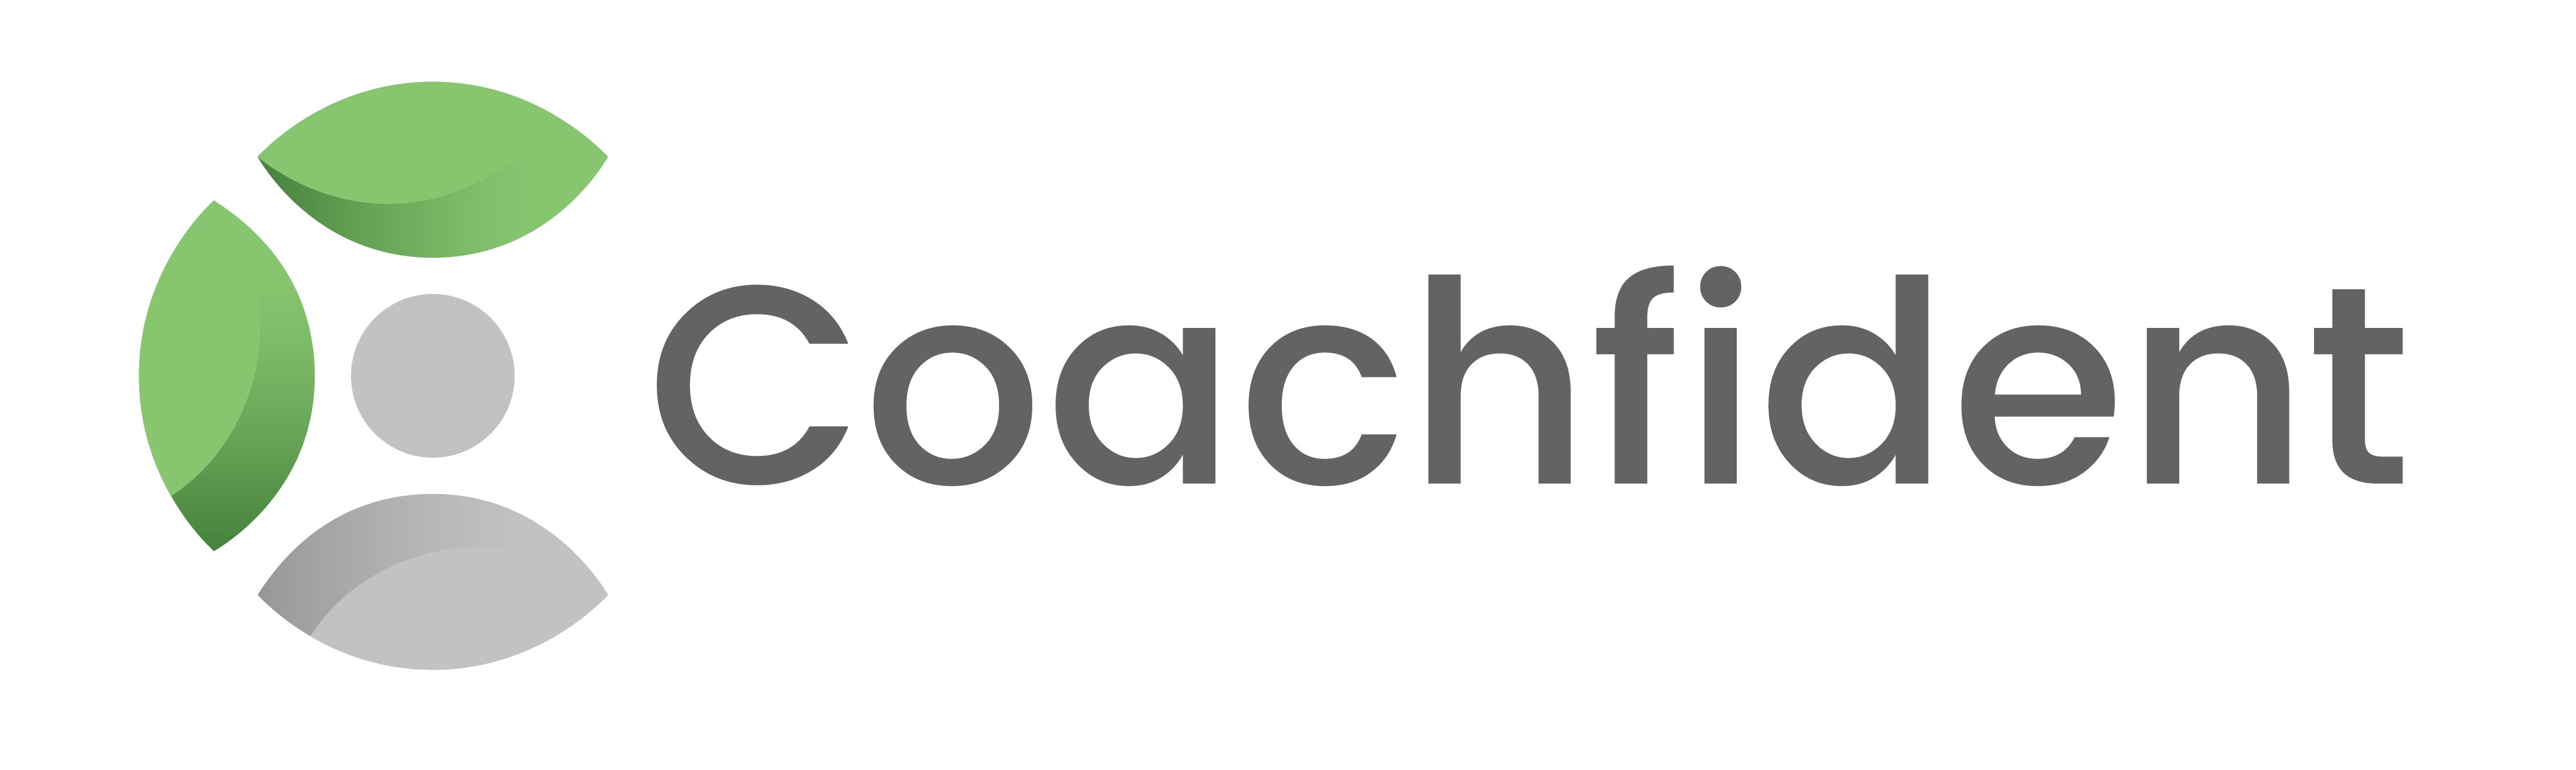 Coachfident_Logo.jpg